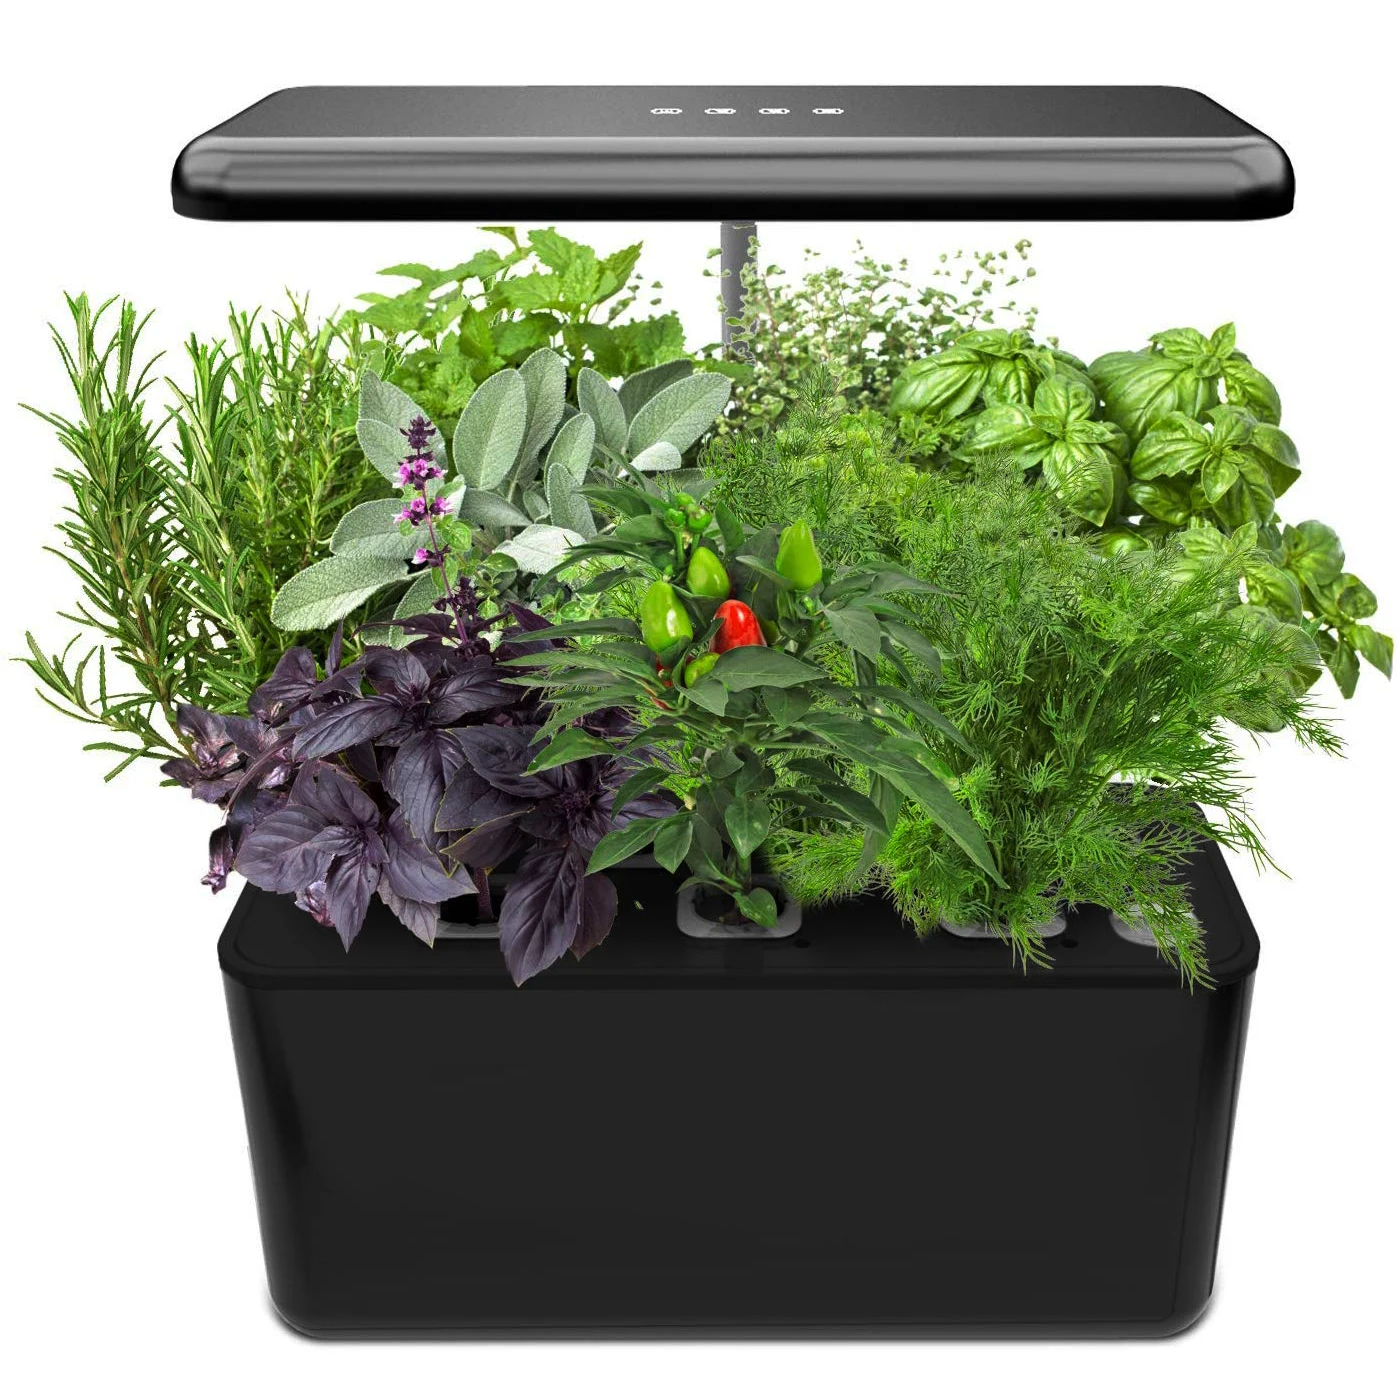 

SHENPU 7 Plants Smart Decorative Indoor Portable Modulary Herb Garden Starter Kit Aero Smart Home Garden